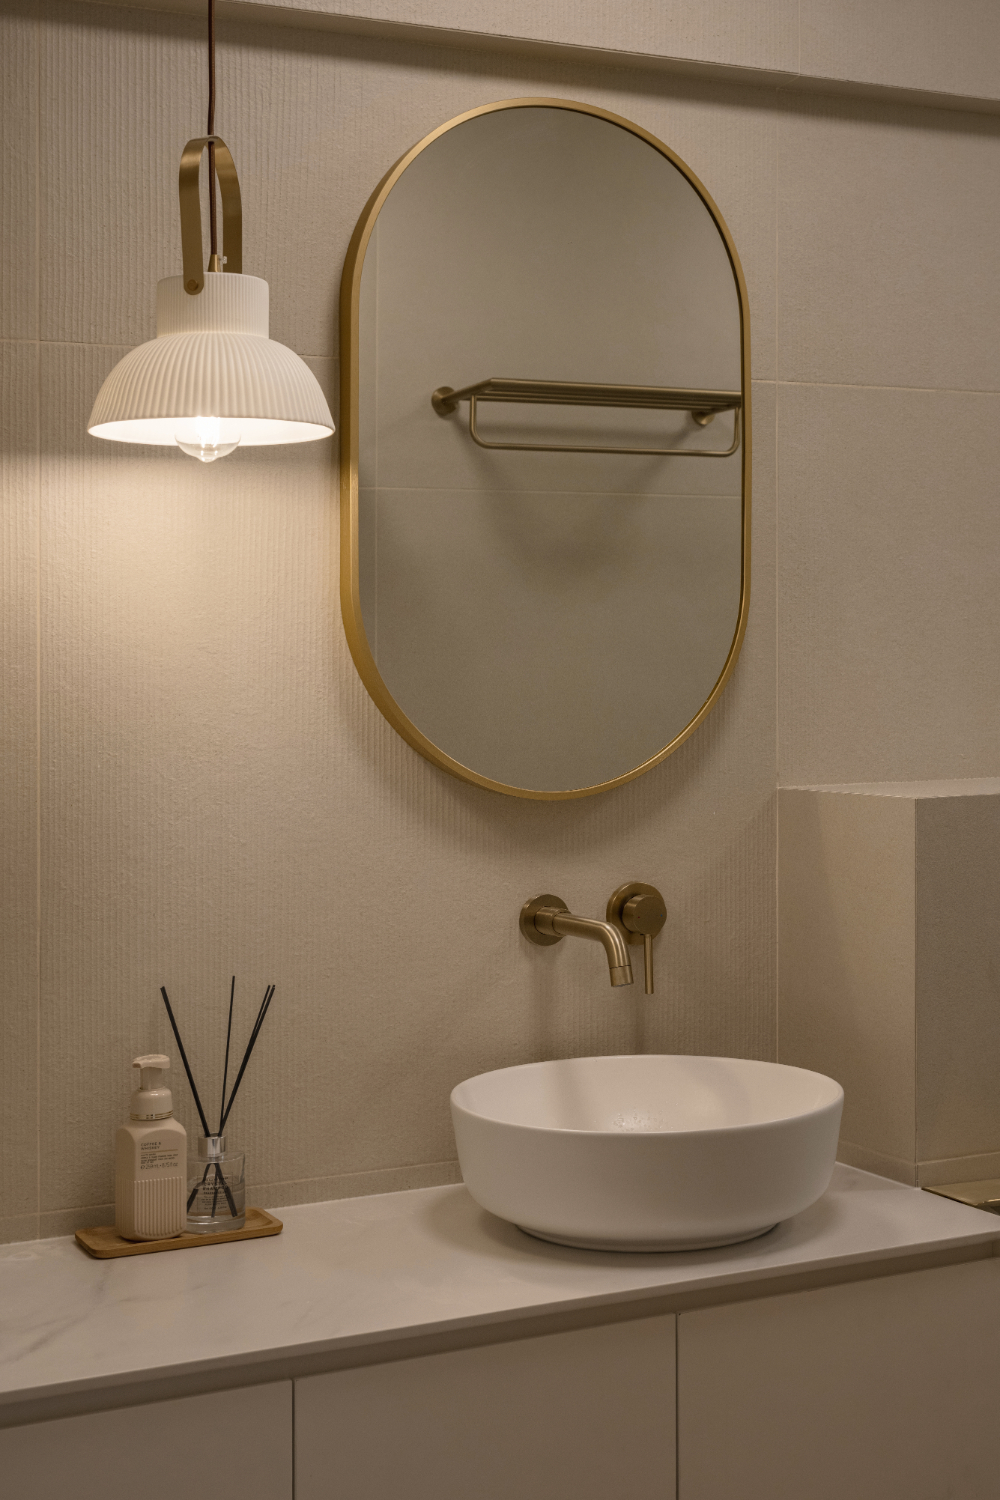 Scandinavian Design - Bathroom - HDB Executive Apartment - Design by Carpenters 匠